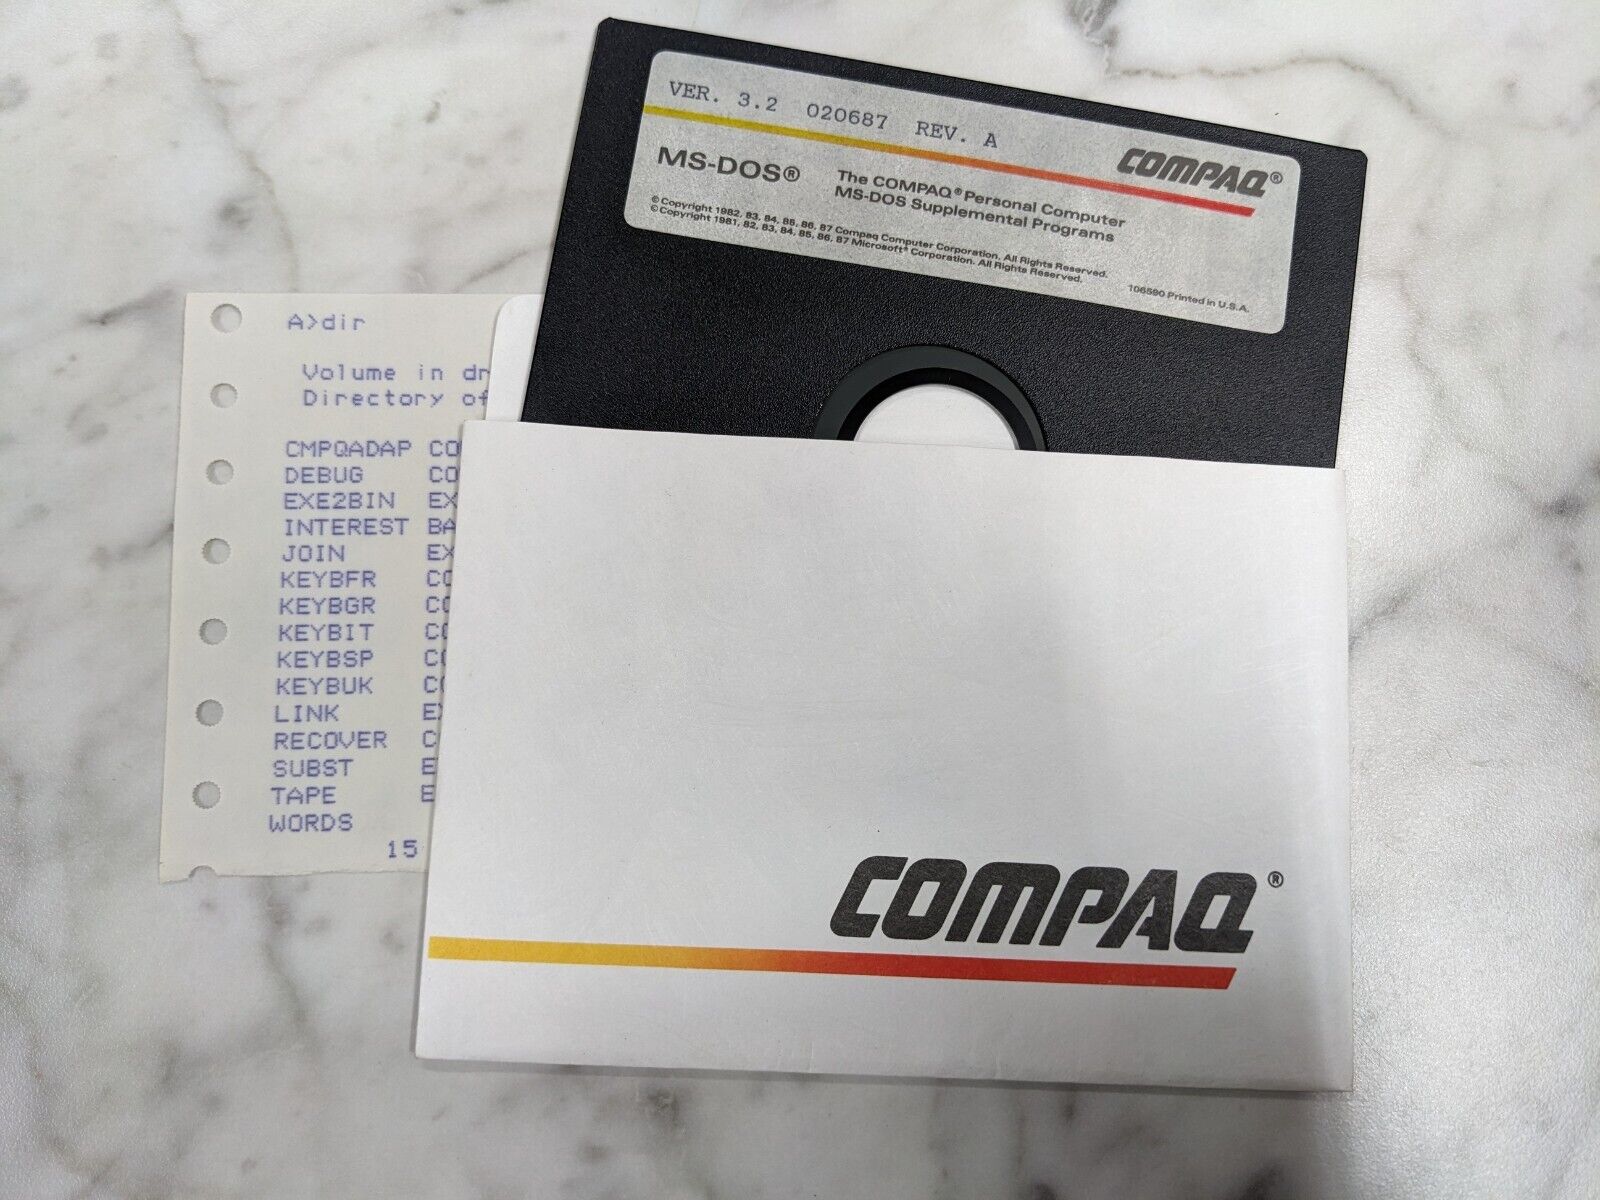 Compaq MS-DOS 020687 REV A PERSONAL COMPUTER SOFTWARE 1987 VINTAGE IBM PC DISK